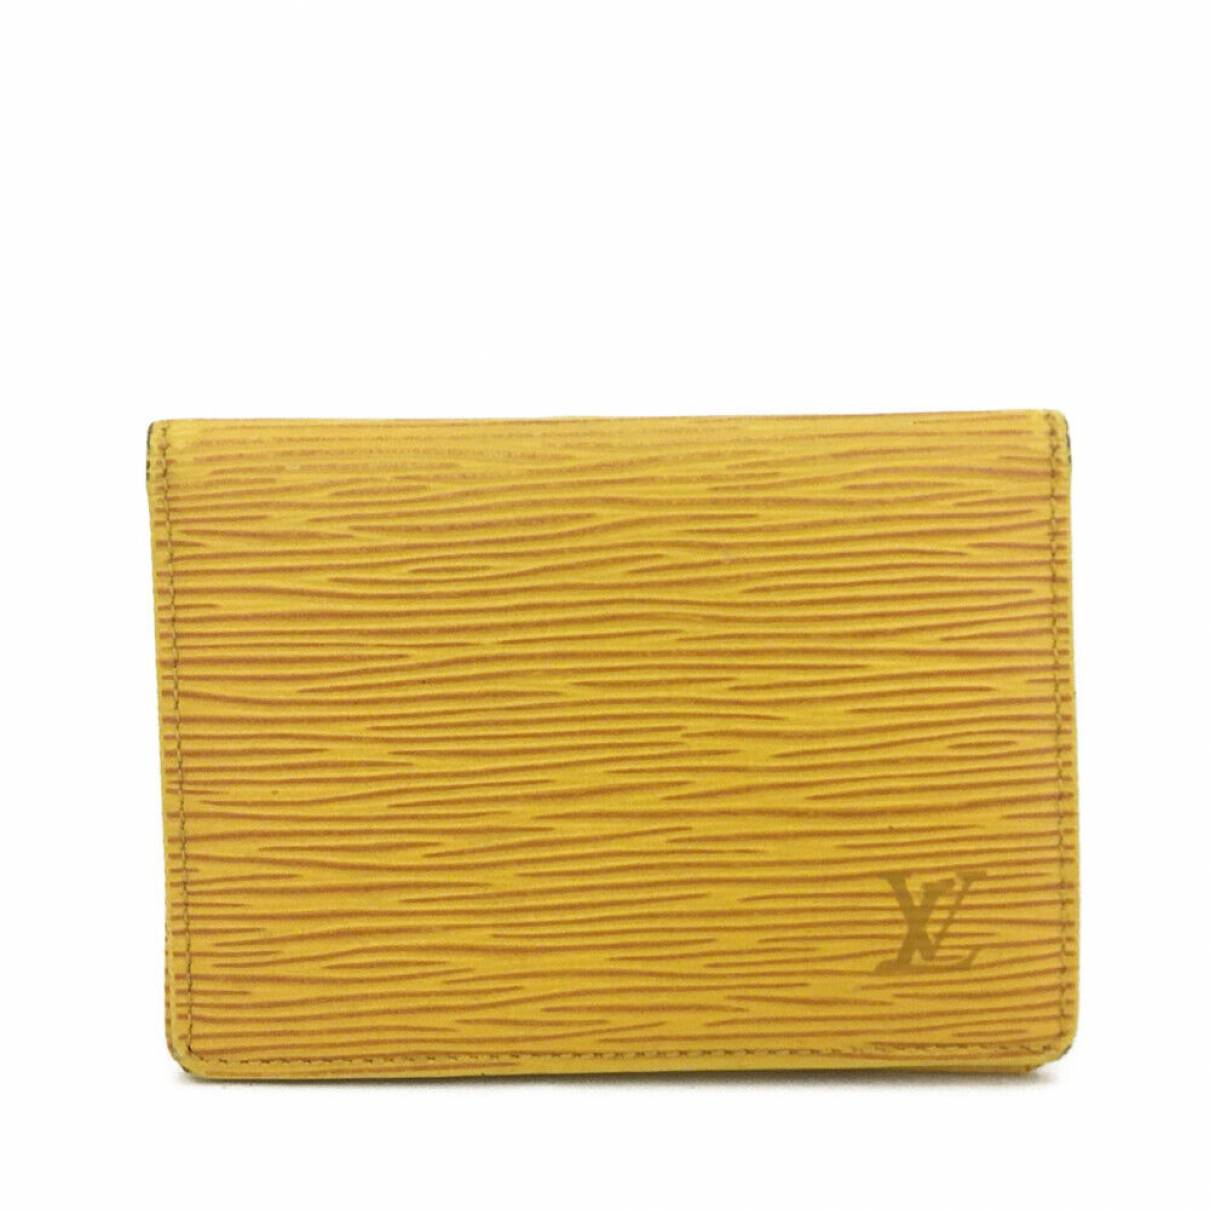 yellow louis vuitton purse